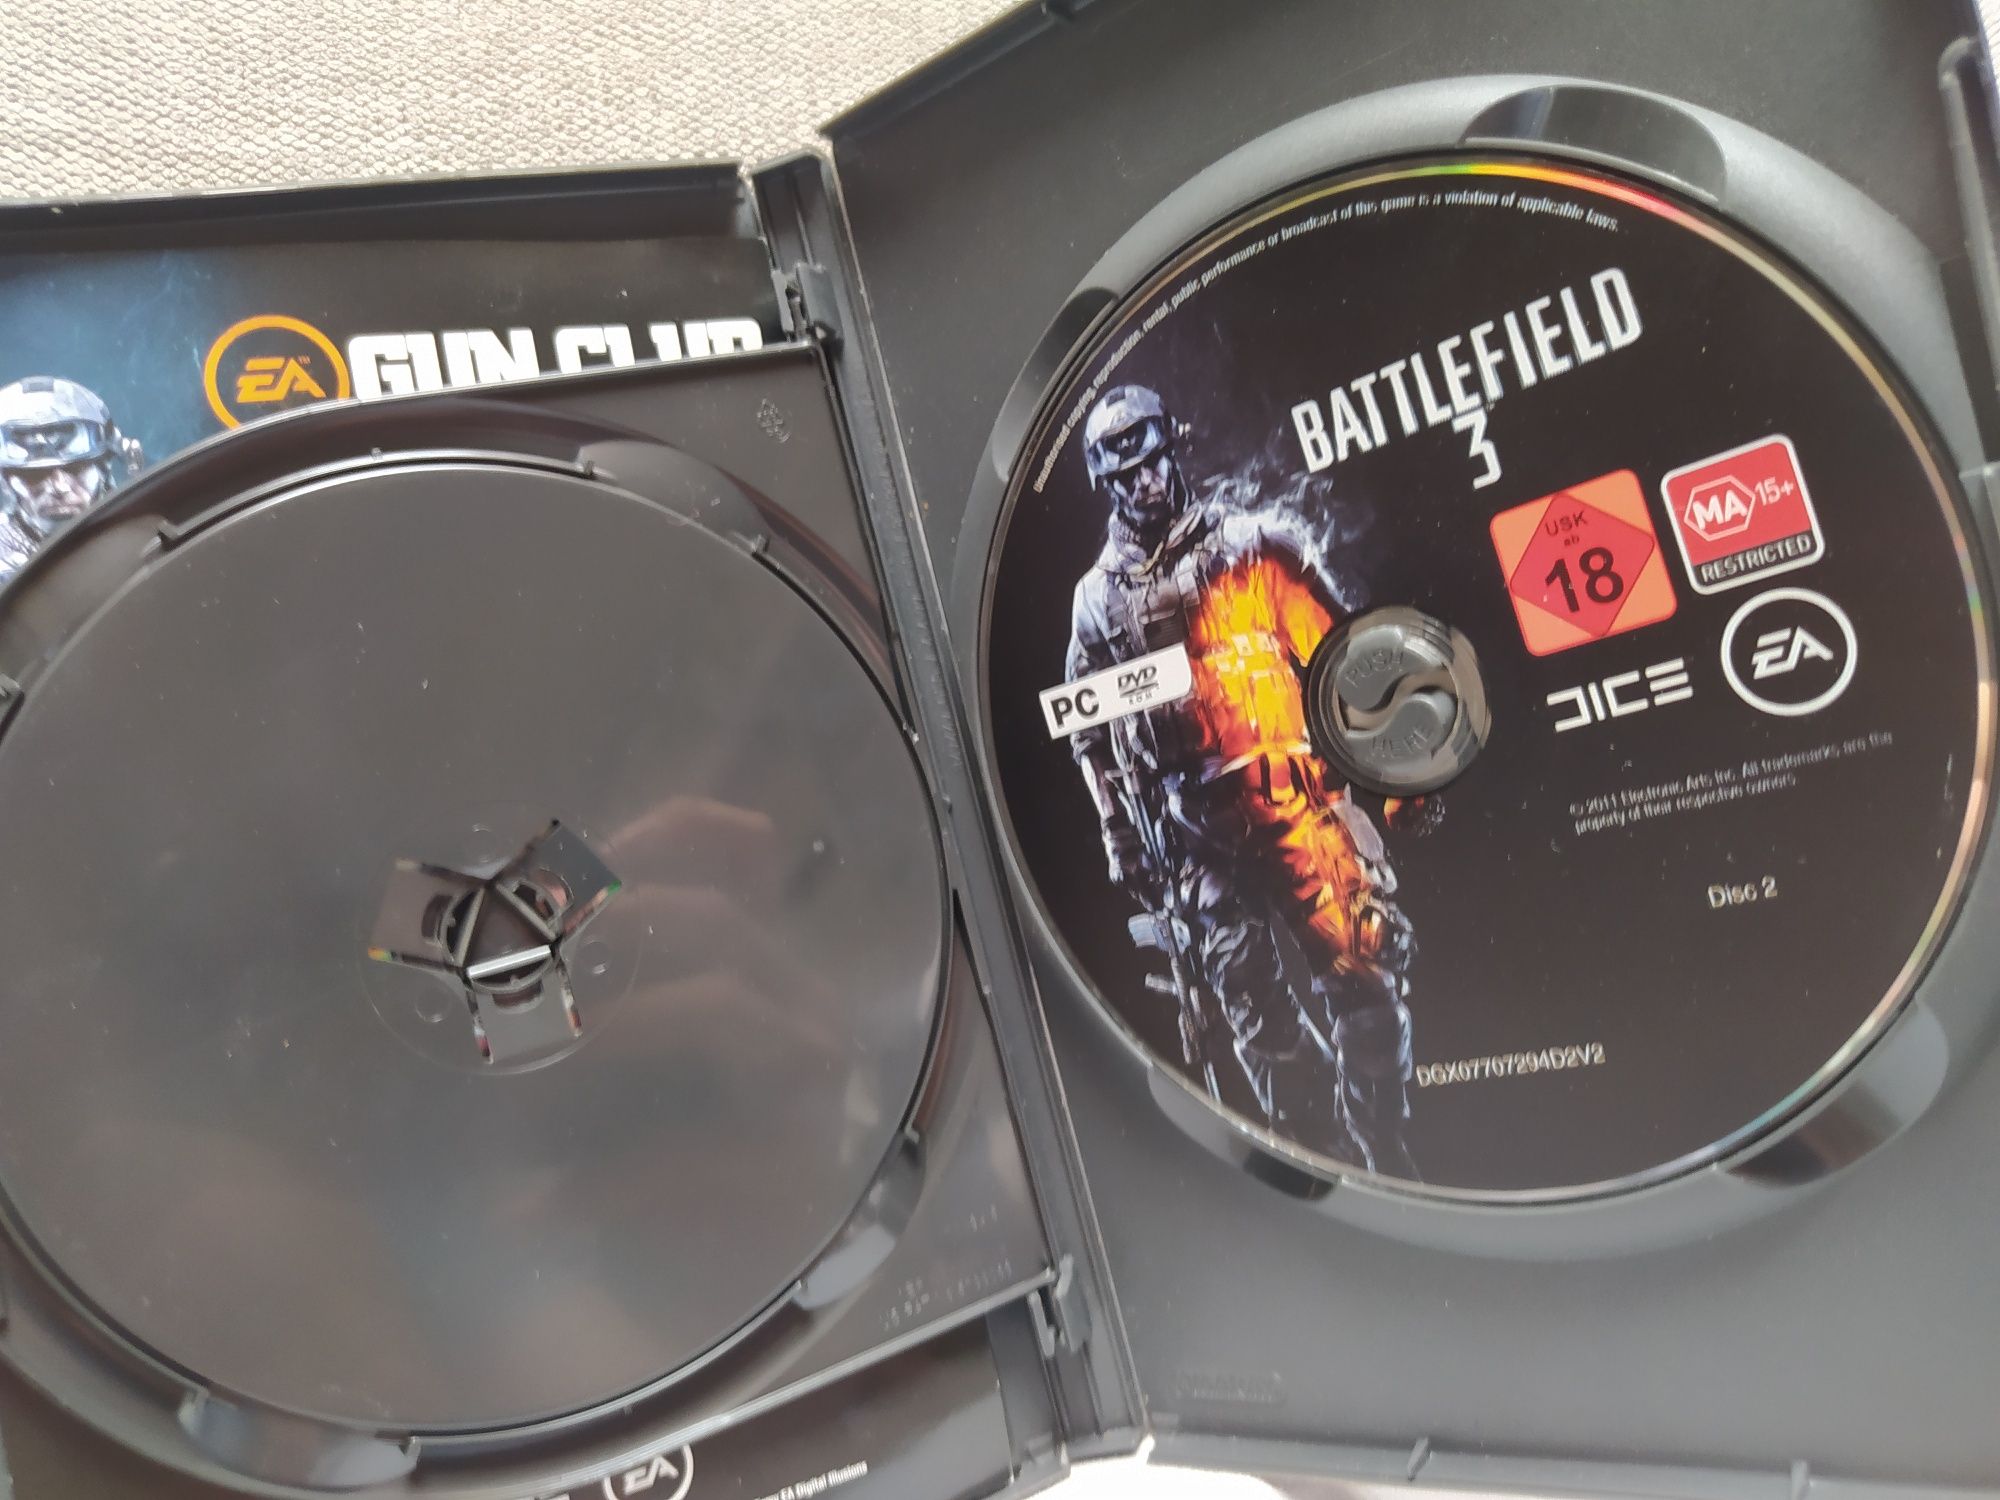 Gra DVD na PC battlefield 3